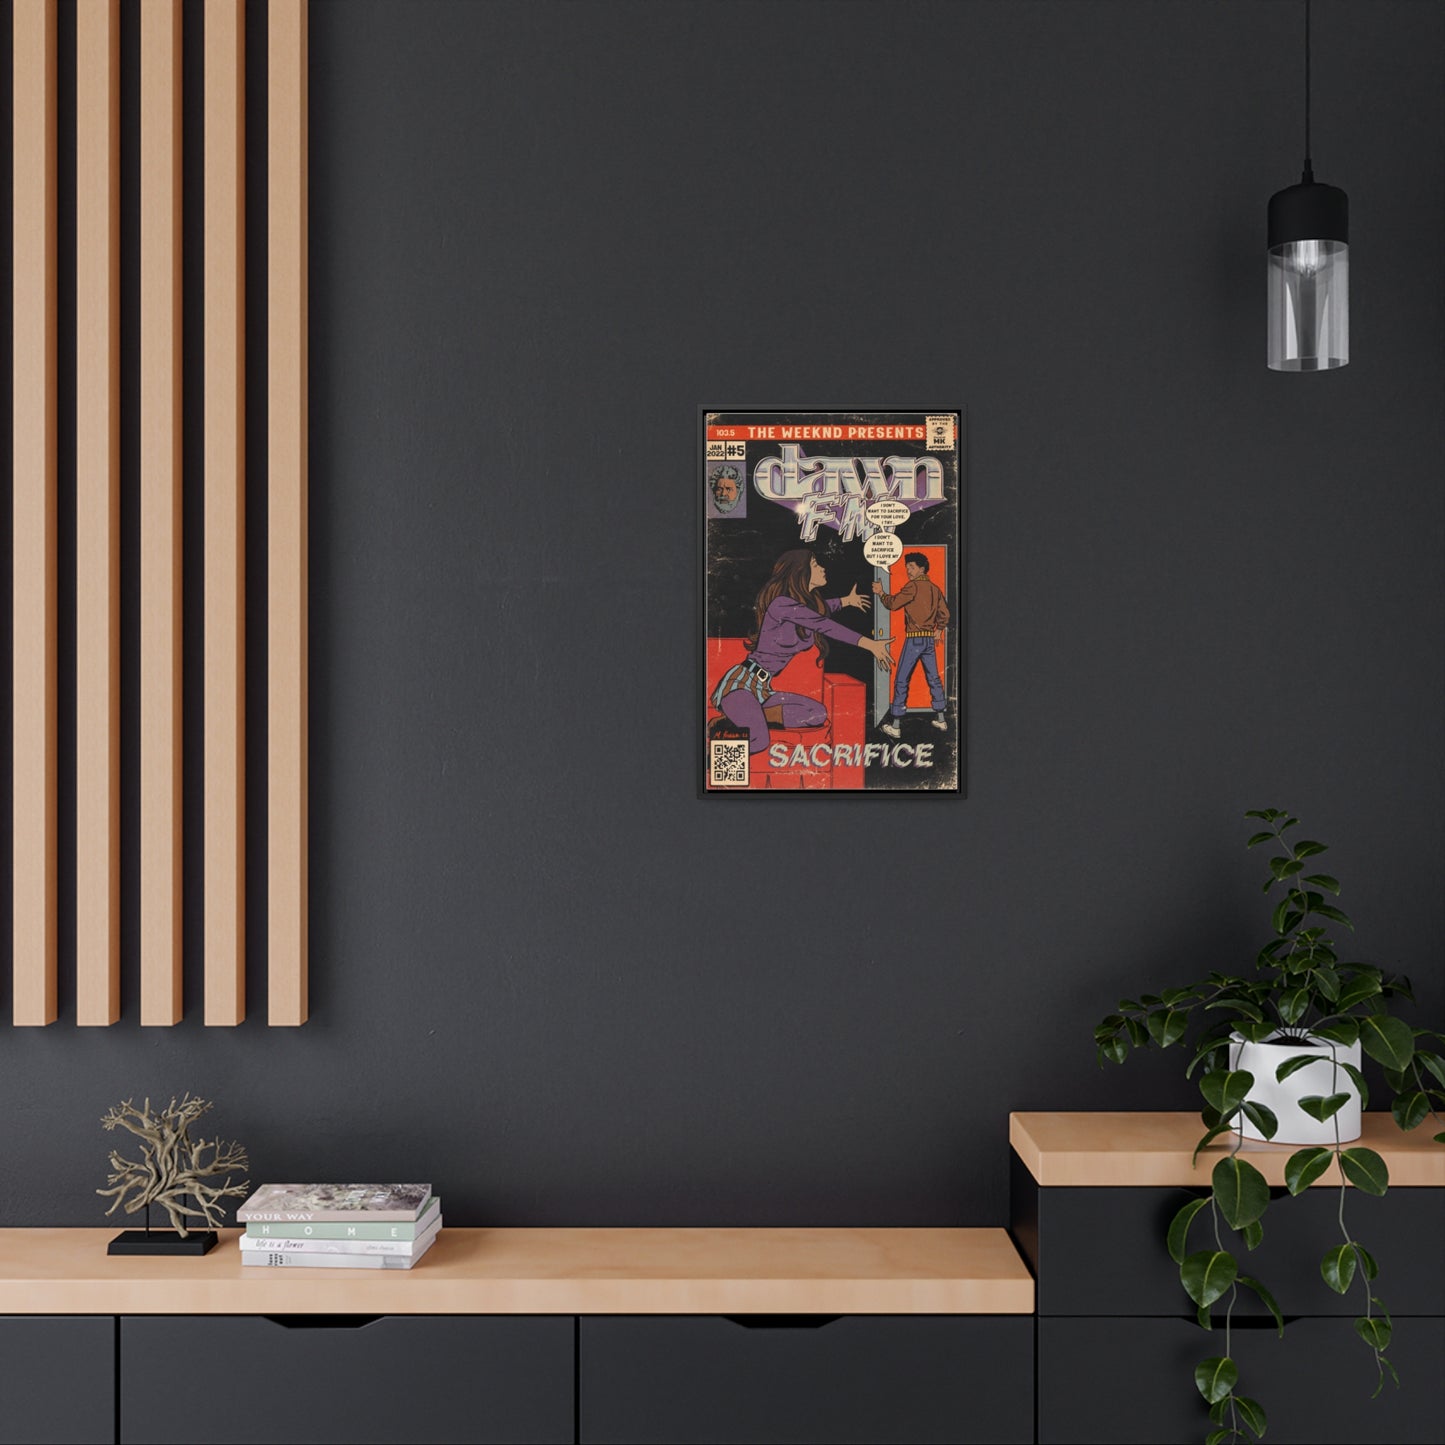 The Weeknd - Dawn FM - Gallery Canvas Wraps, Vertical Frame